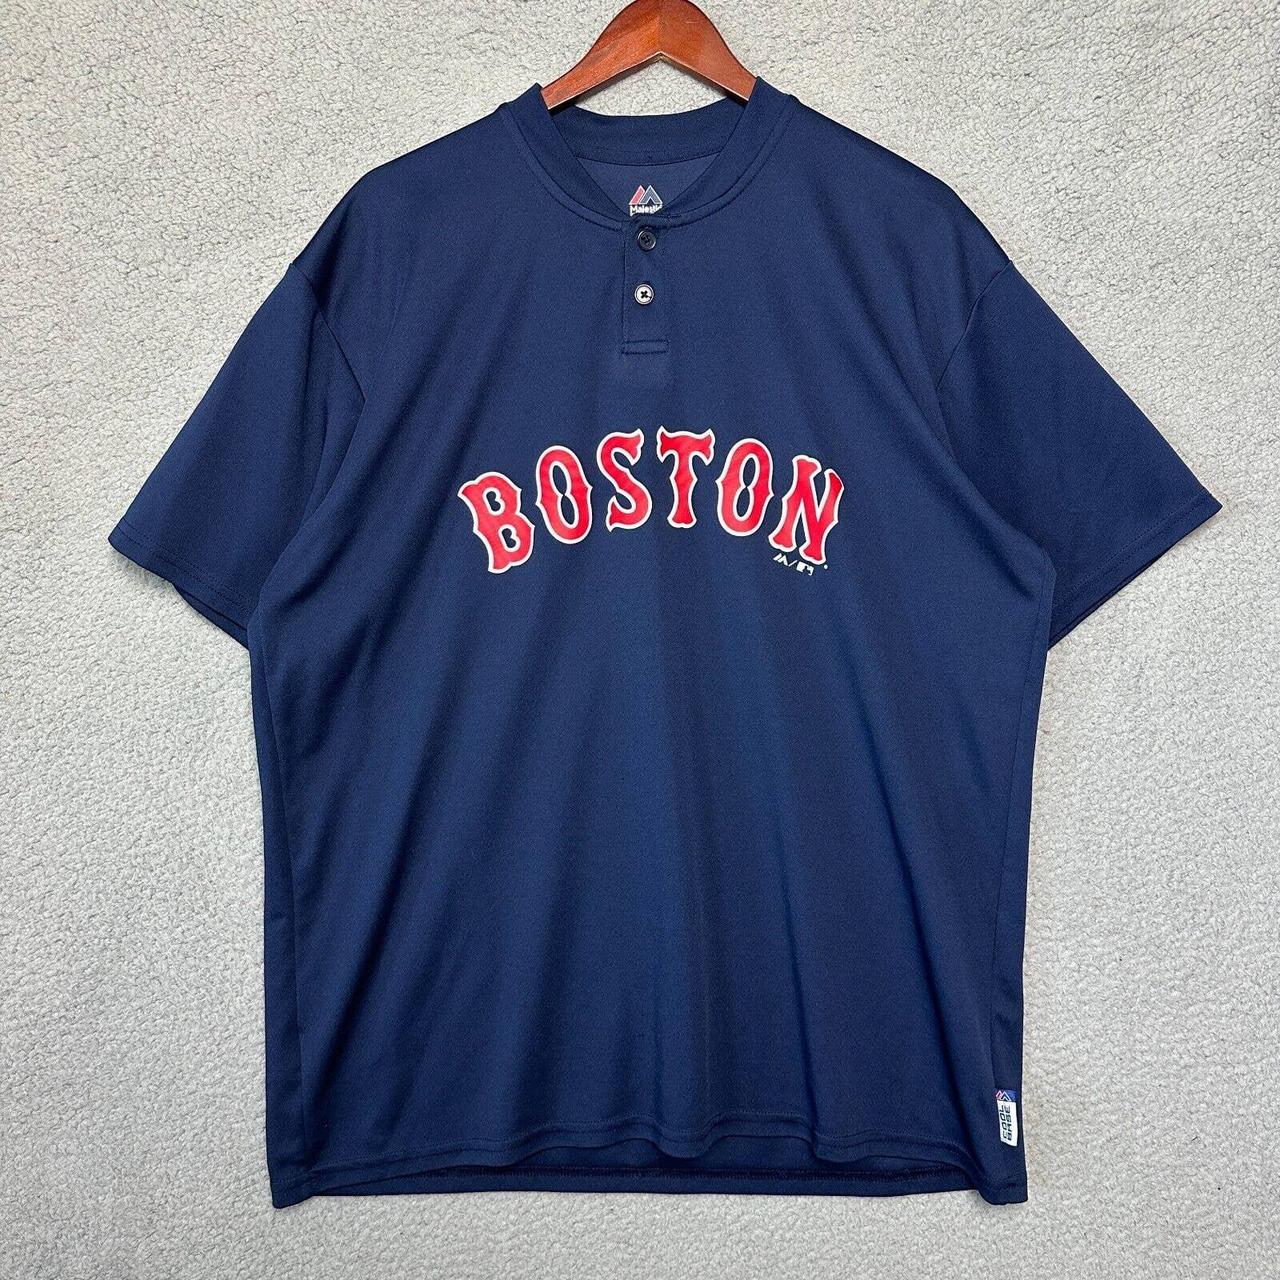 BOSTON RED SOX MLB MAJESTIC SHIRT L